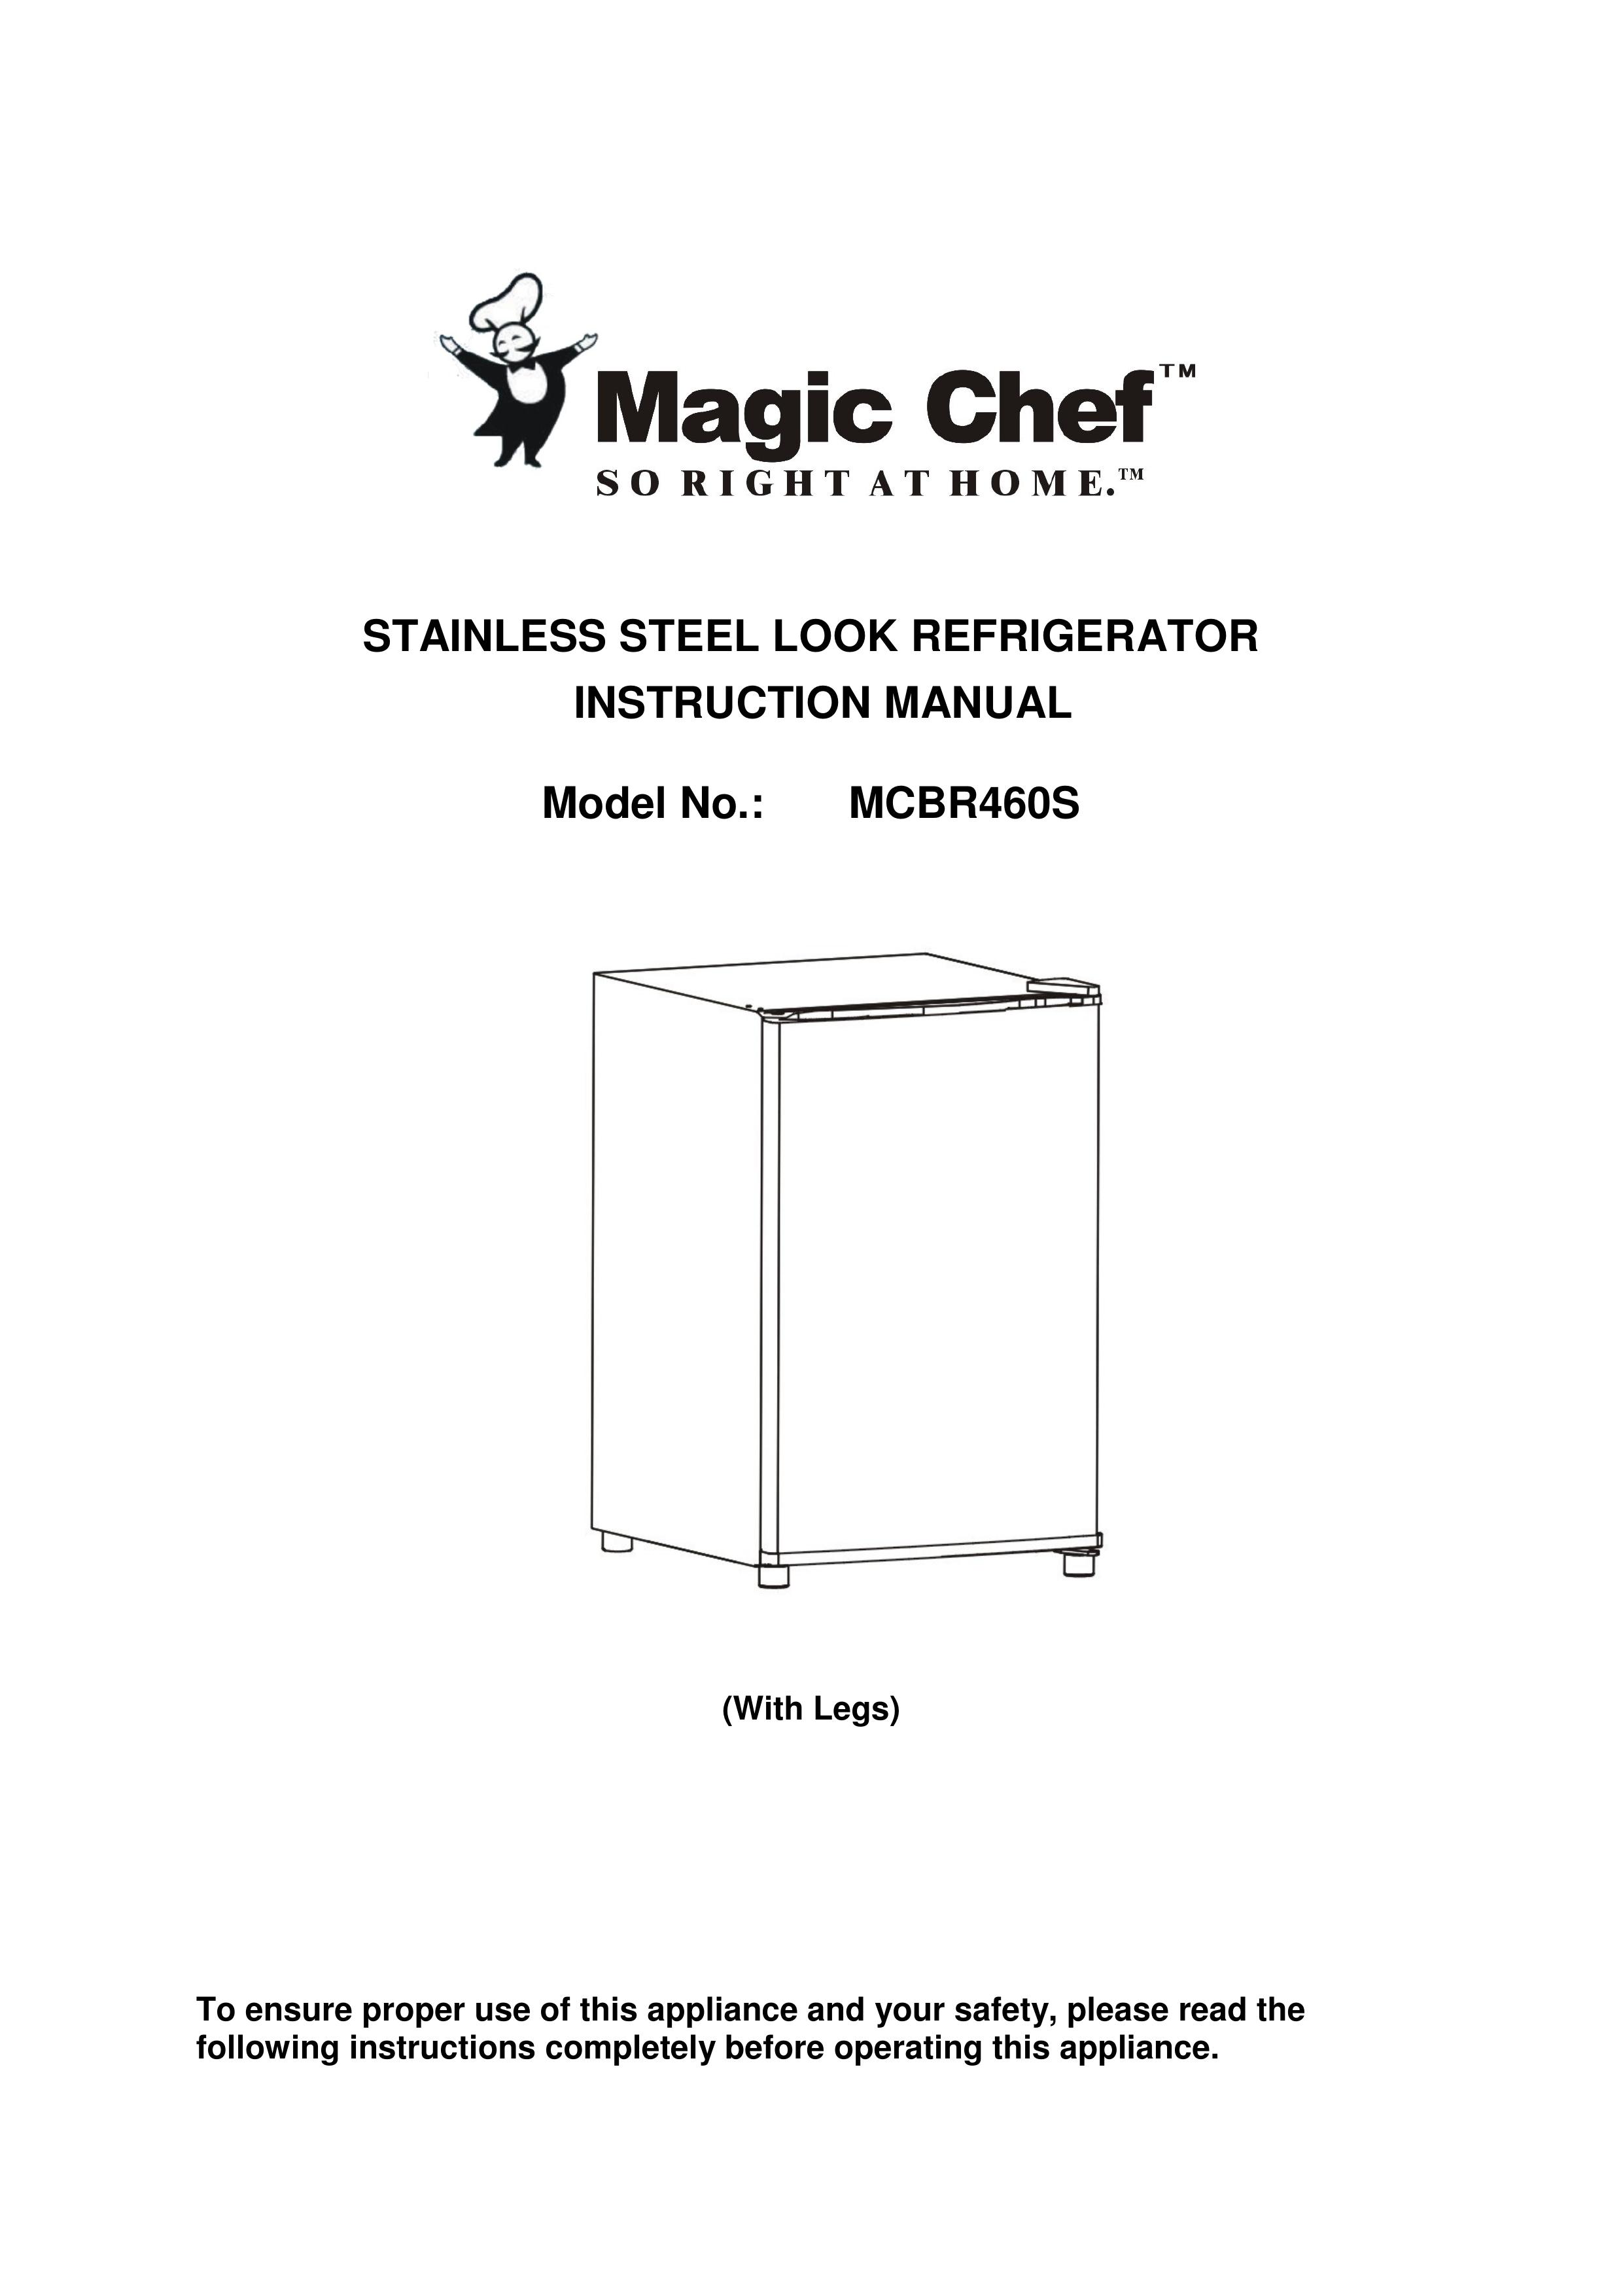 Magic Chef MCBR460S Refrigerator User Manual